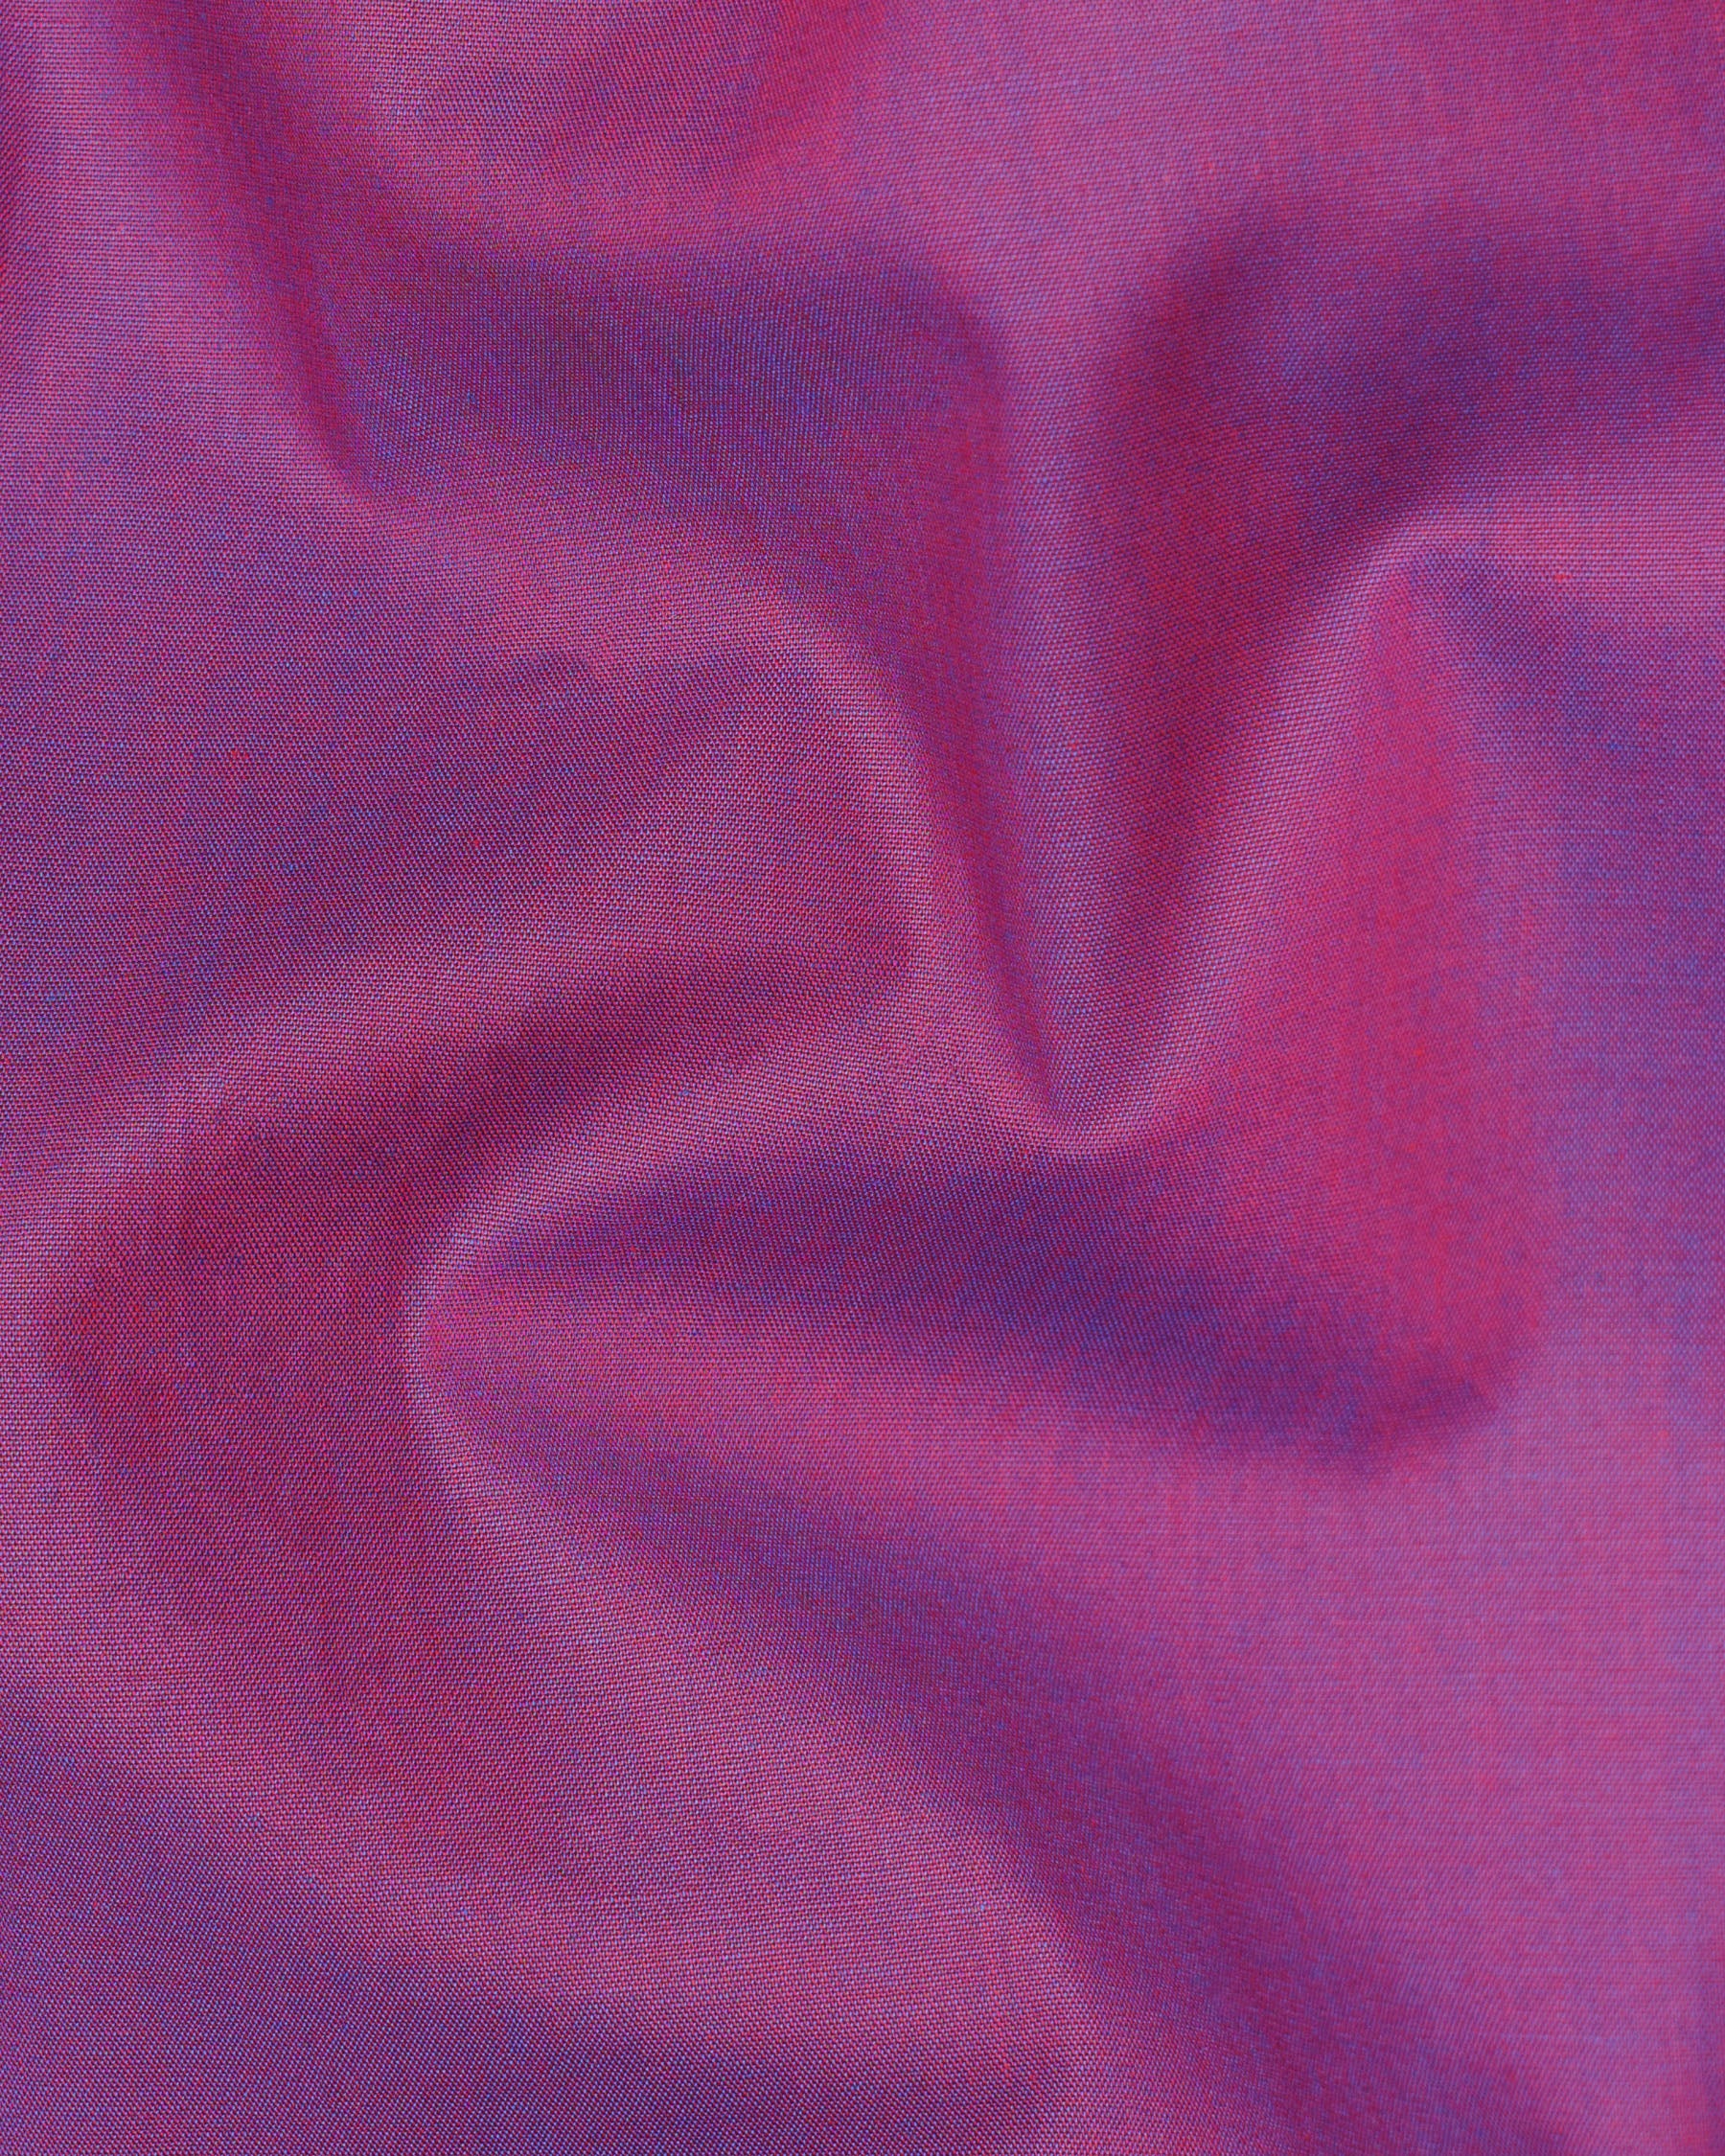 Royal Heath Pink Chambray Premium Cotton Shirt 6075-BD-BLE-38, 6075-BD-BLE-H-38, 6075-BD-BLE-39, 6075-BD-BLE-H-39, 6075-BD-BLE-40, 6075-BD-BLE-H-40, 6075-BD-BLE-42, 6075-BD-BLE-H-42, 6075-BD-BLE-44, 6075-BD-BLE-H-44, 6075-BD-BLE-46, 6075-BD-BLE-H-46, 6075-BD-BLE-48, 6075-BD-BLE-H-48, 6075-BD-BLE-50, 6075-BD-BLE-H-50, 6075-BD-BLE-52, 6075-BD-BLE-H-52